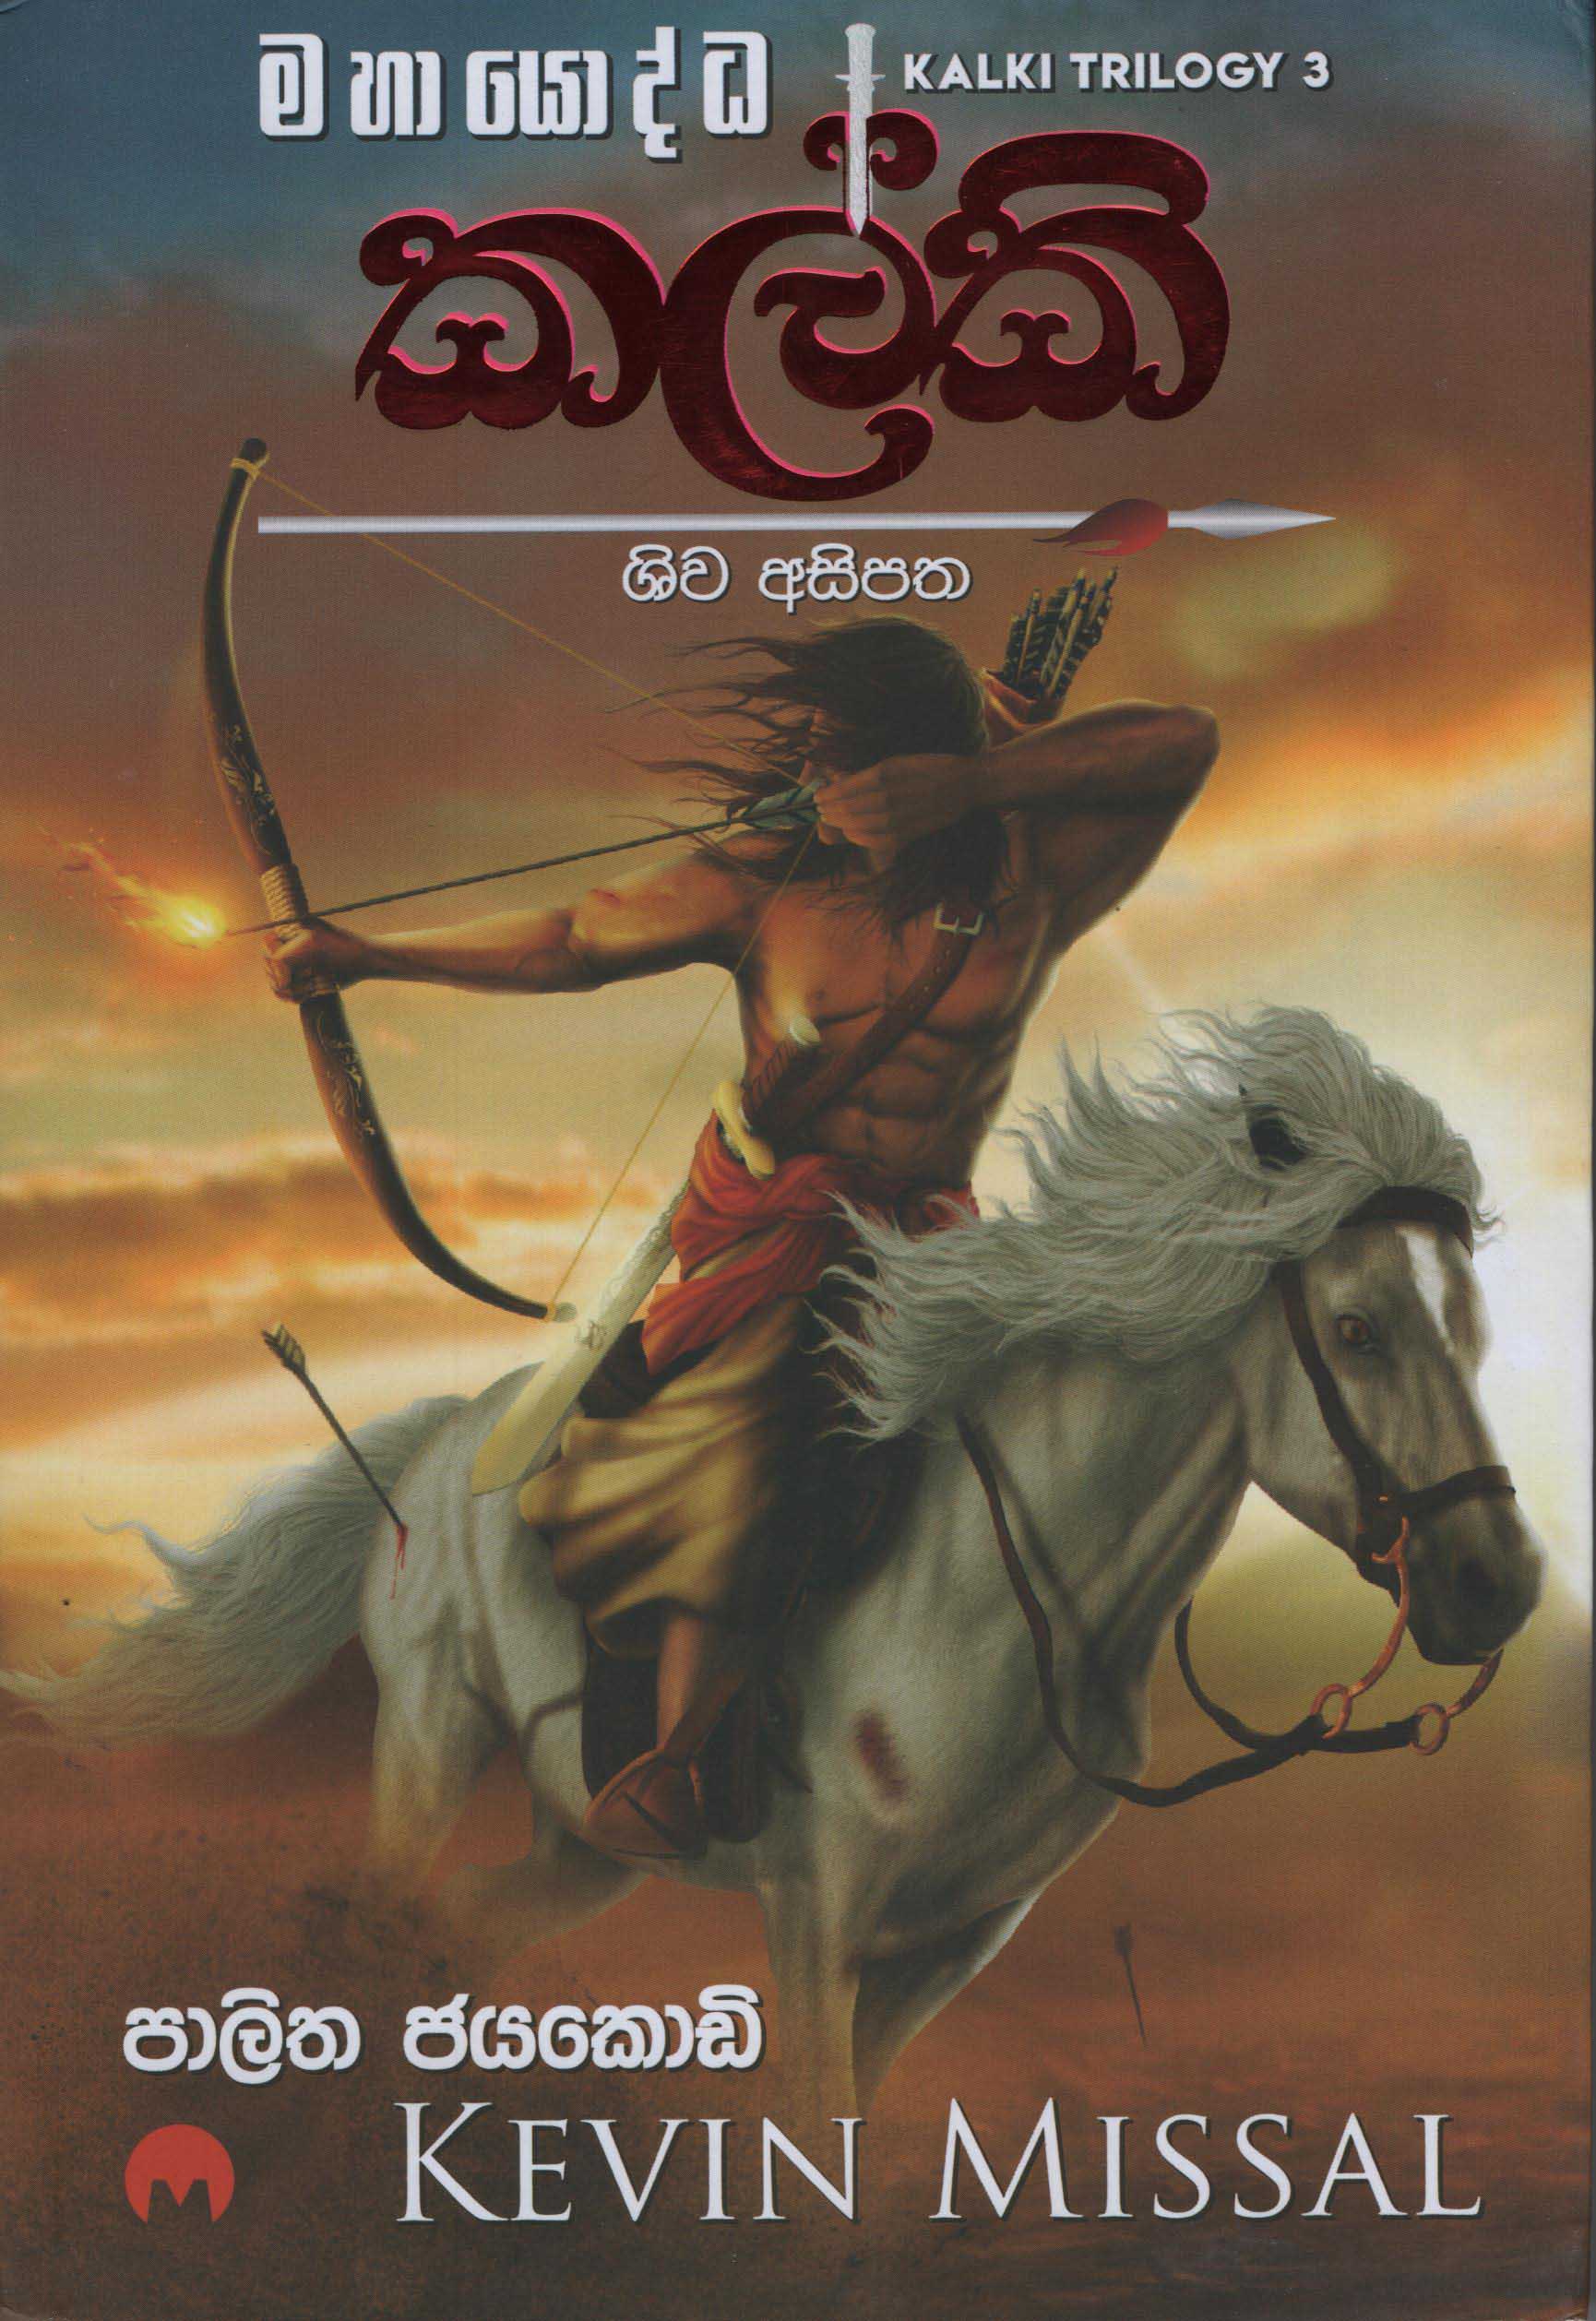 Kalki (MahaYoddha) - Translation of Kalki Trilogy 3 By Kevin Missal